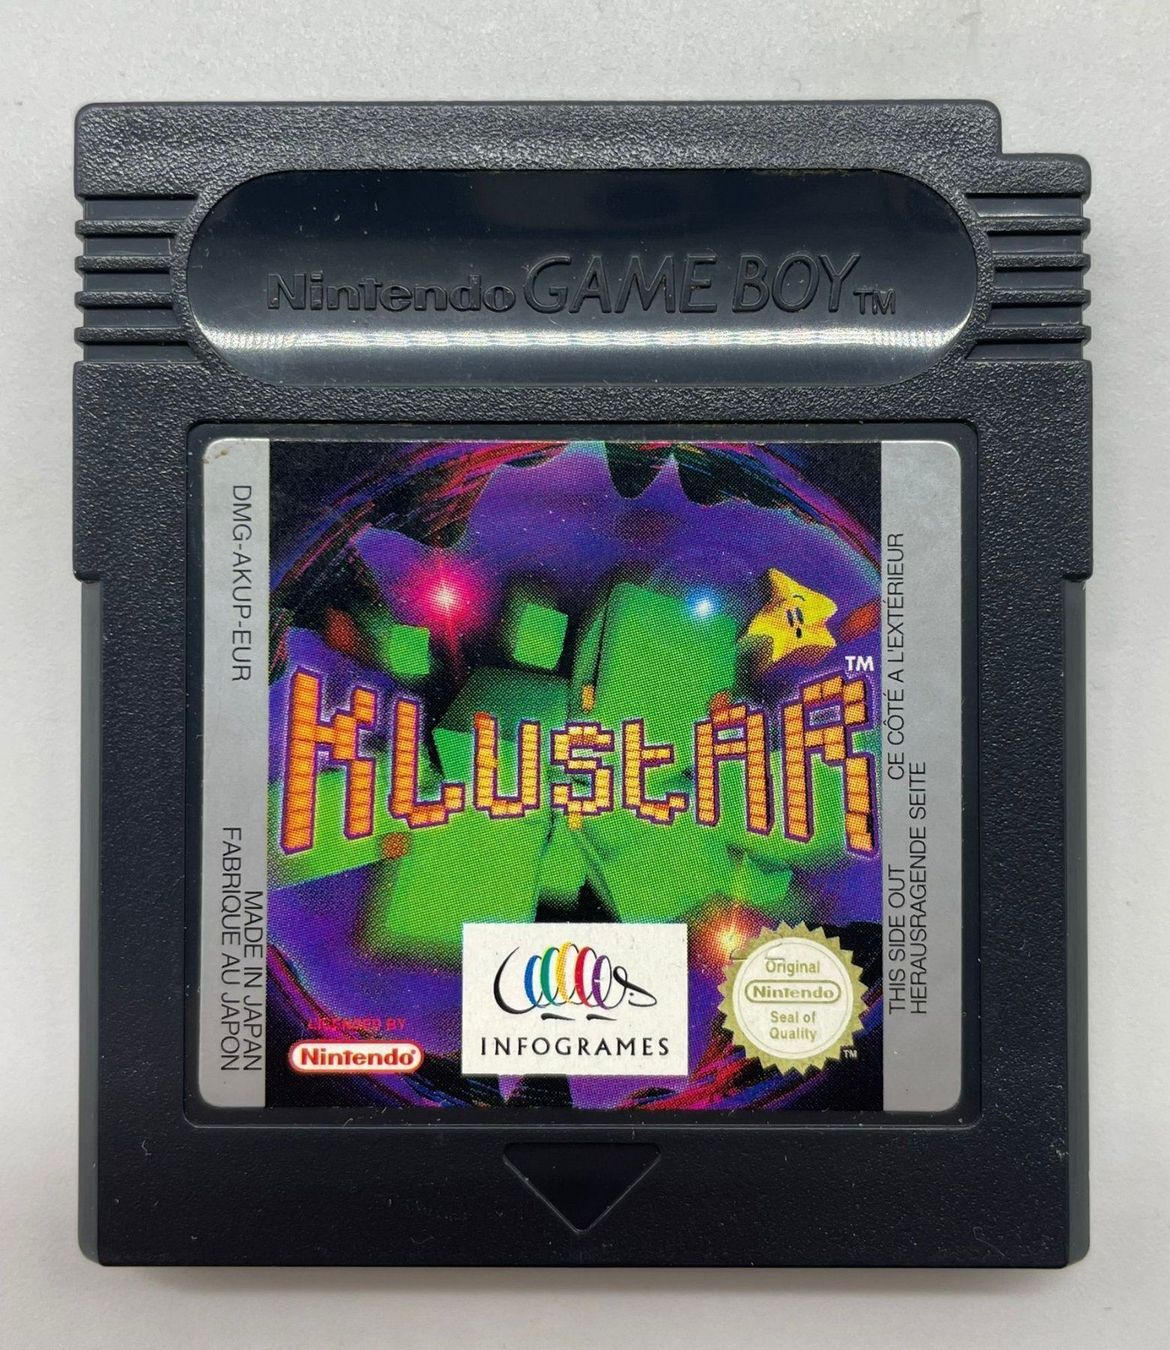 KLUSTAR - Nintendo Game Boy (module)